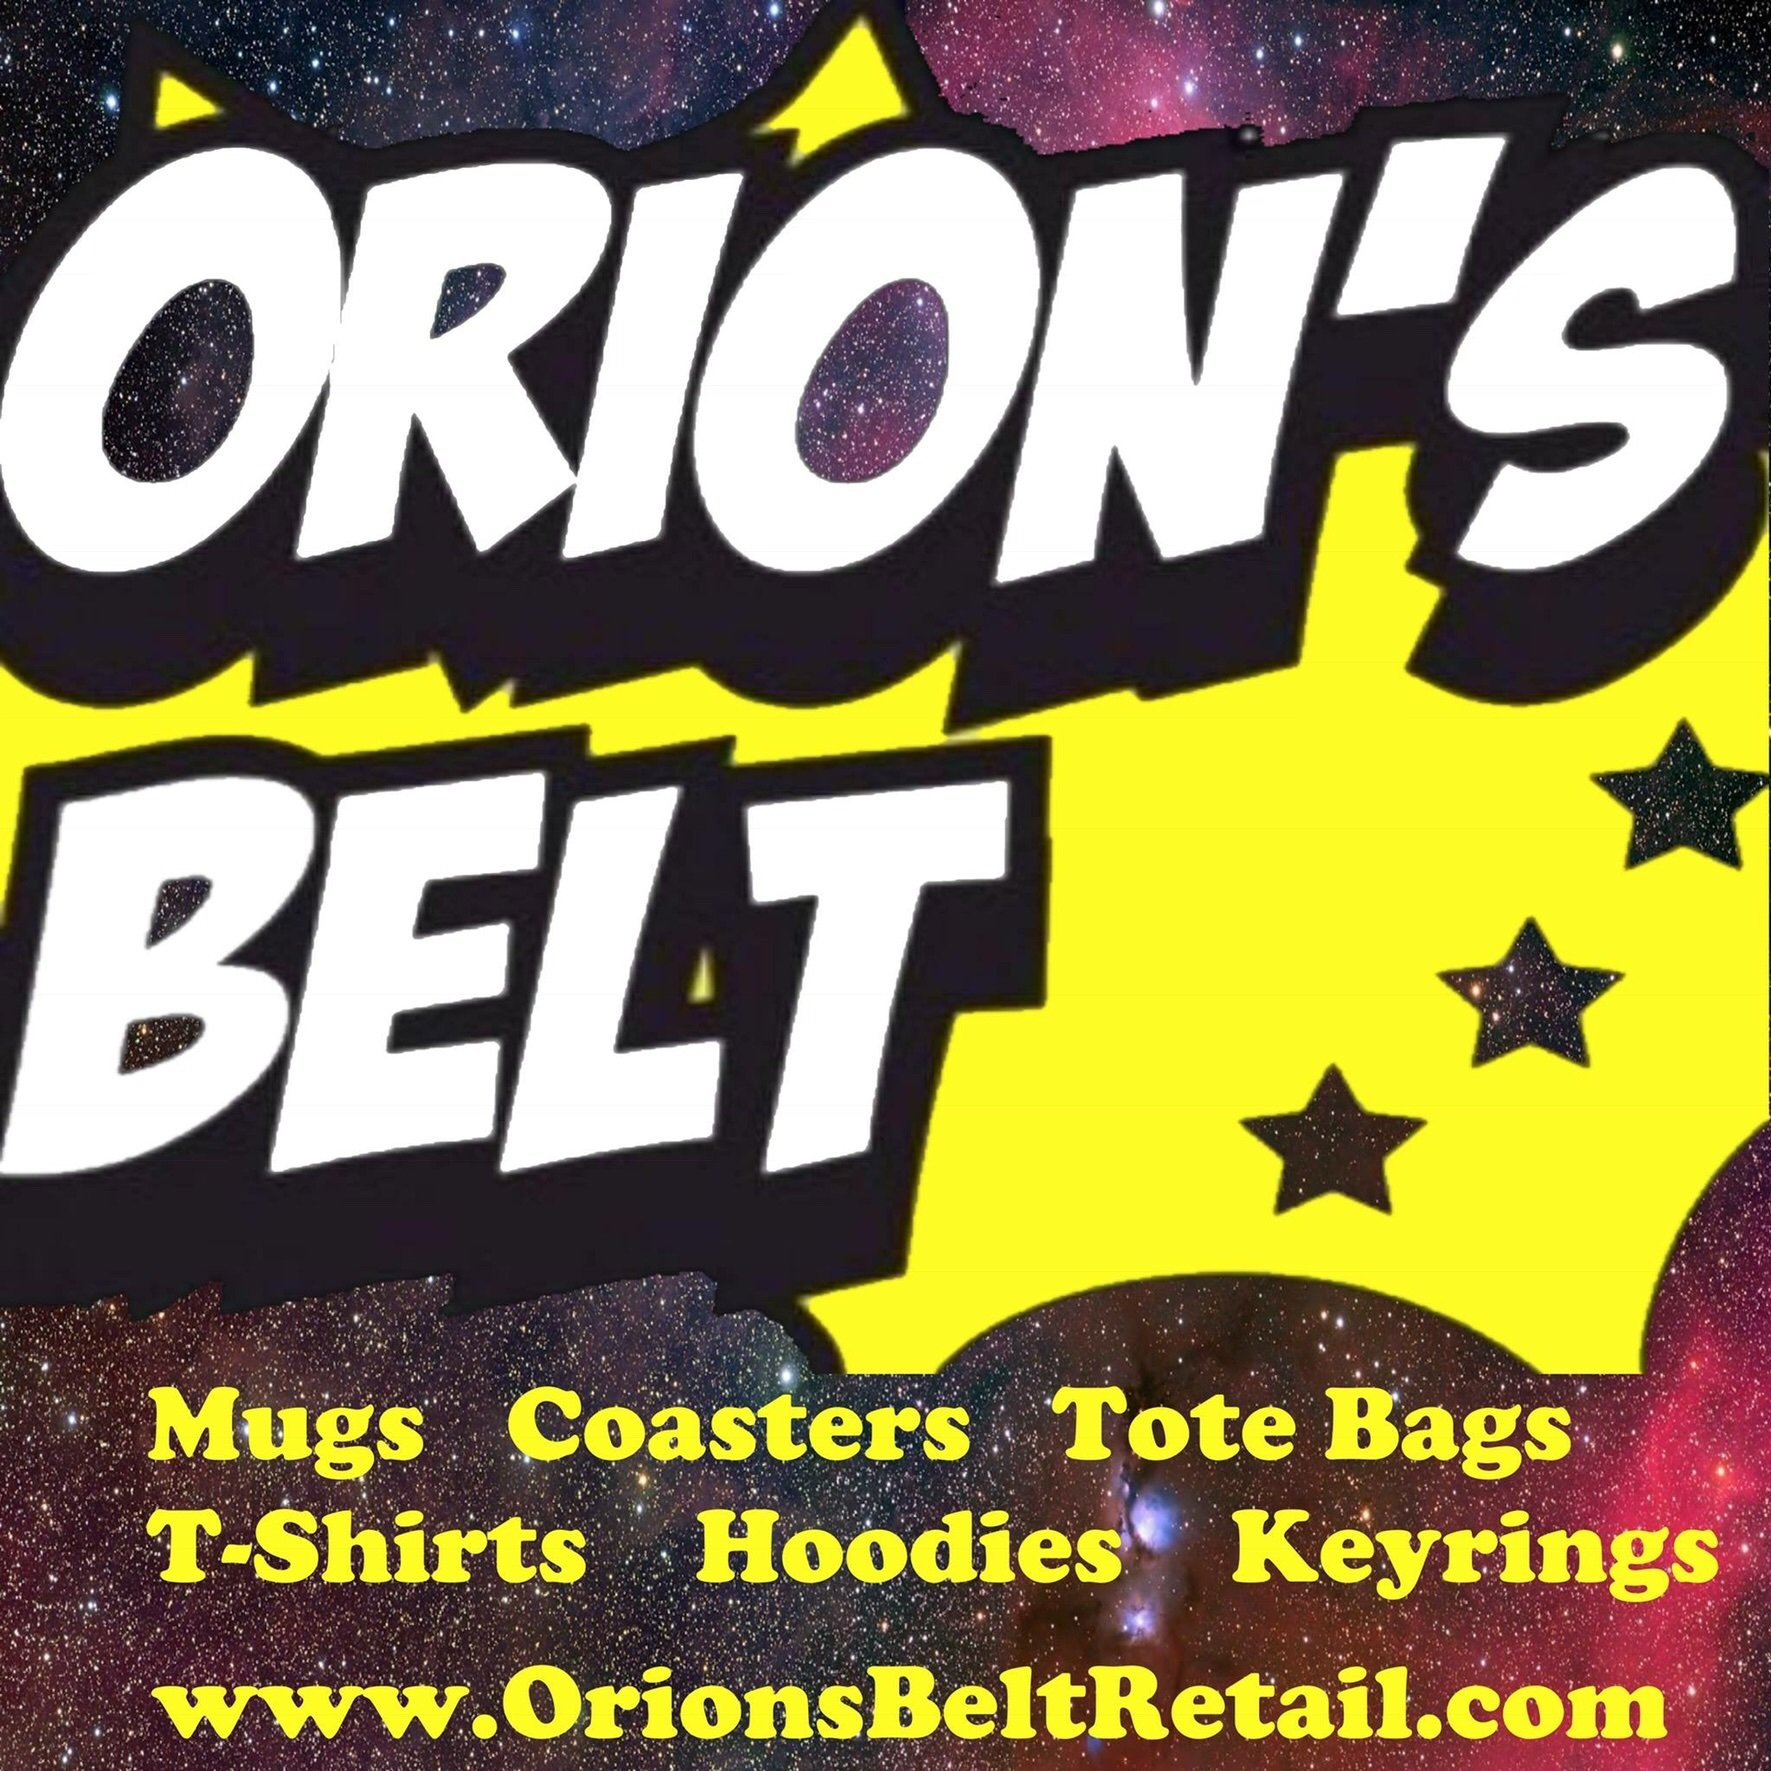 OrionsBeltRetail